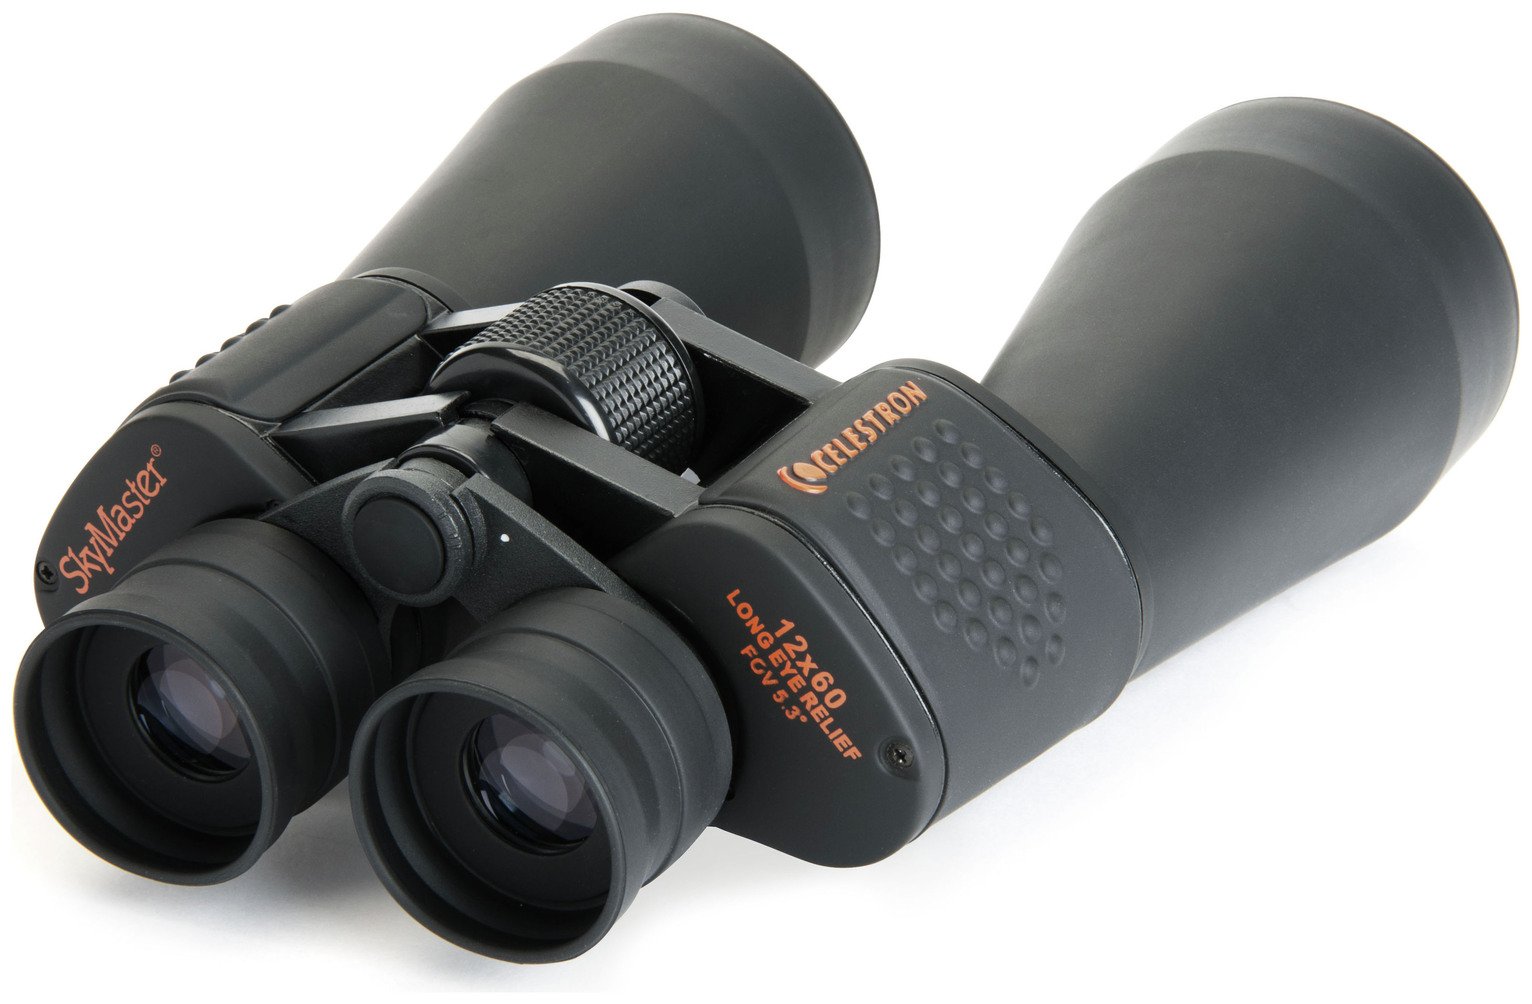 Celestron Skymaster 12x60 Binoculars Review